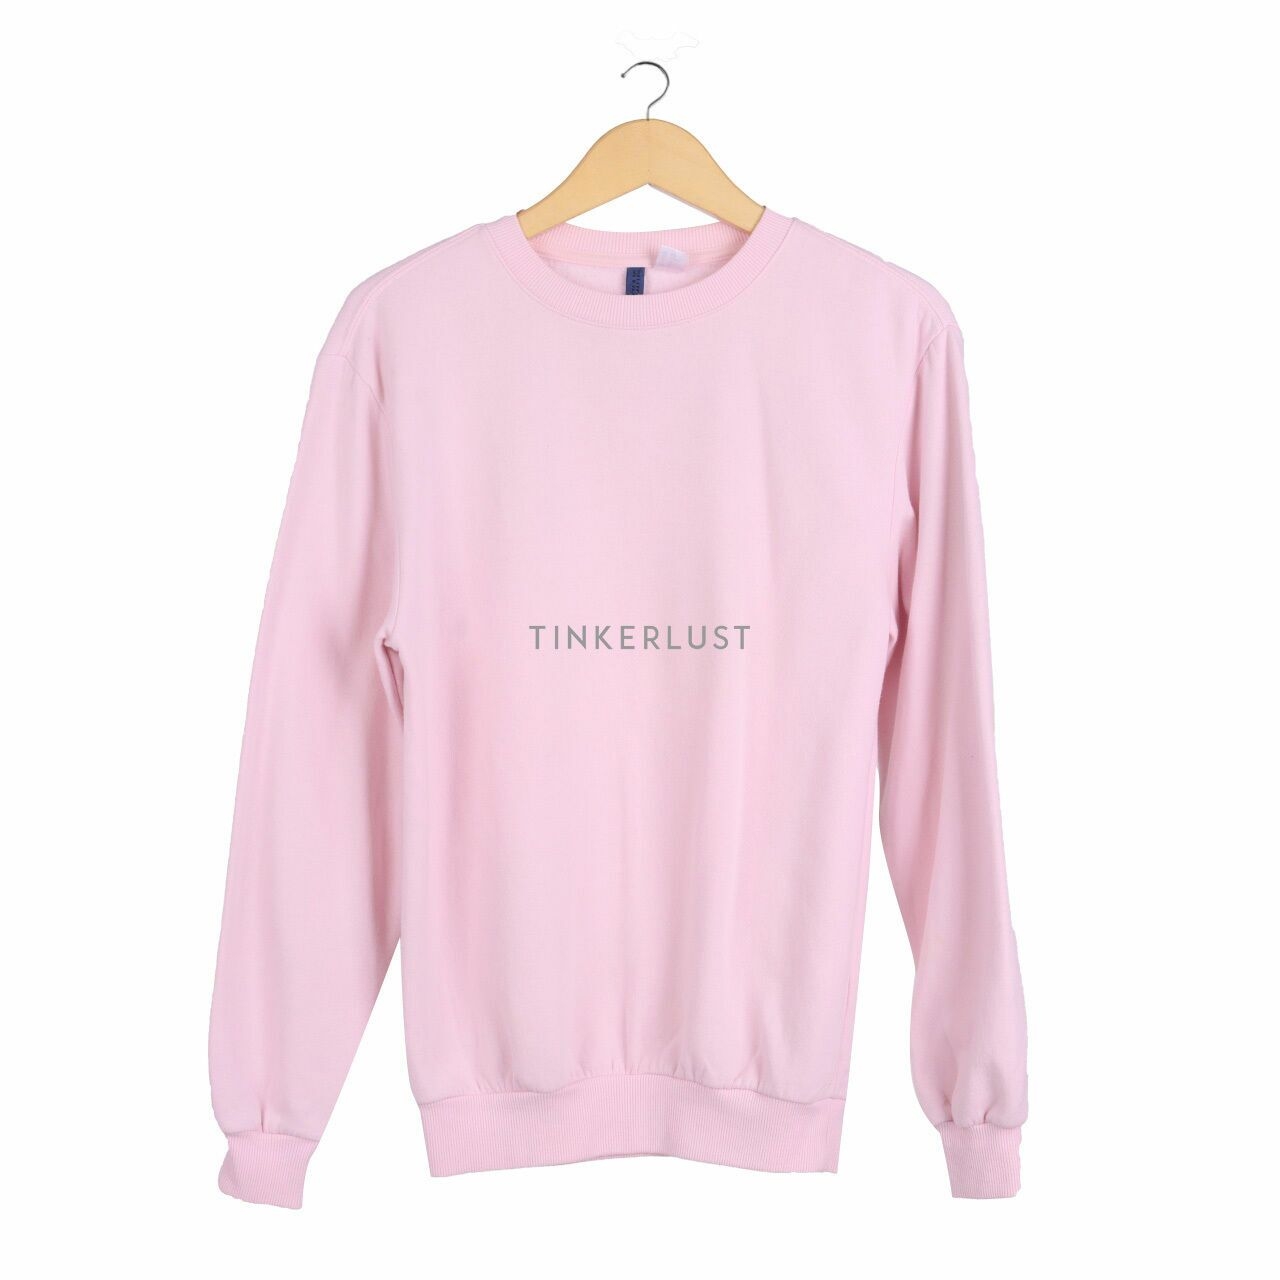 H&M Pink Sweater